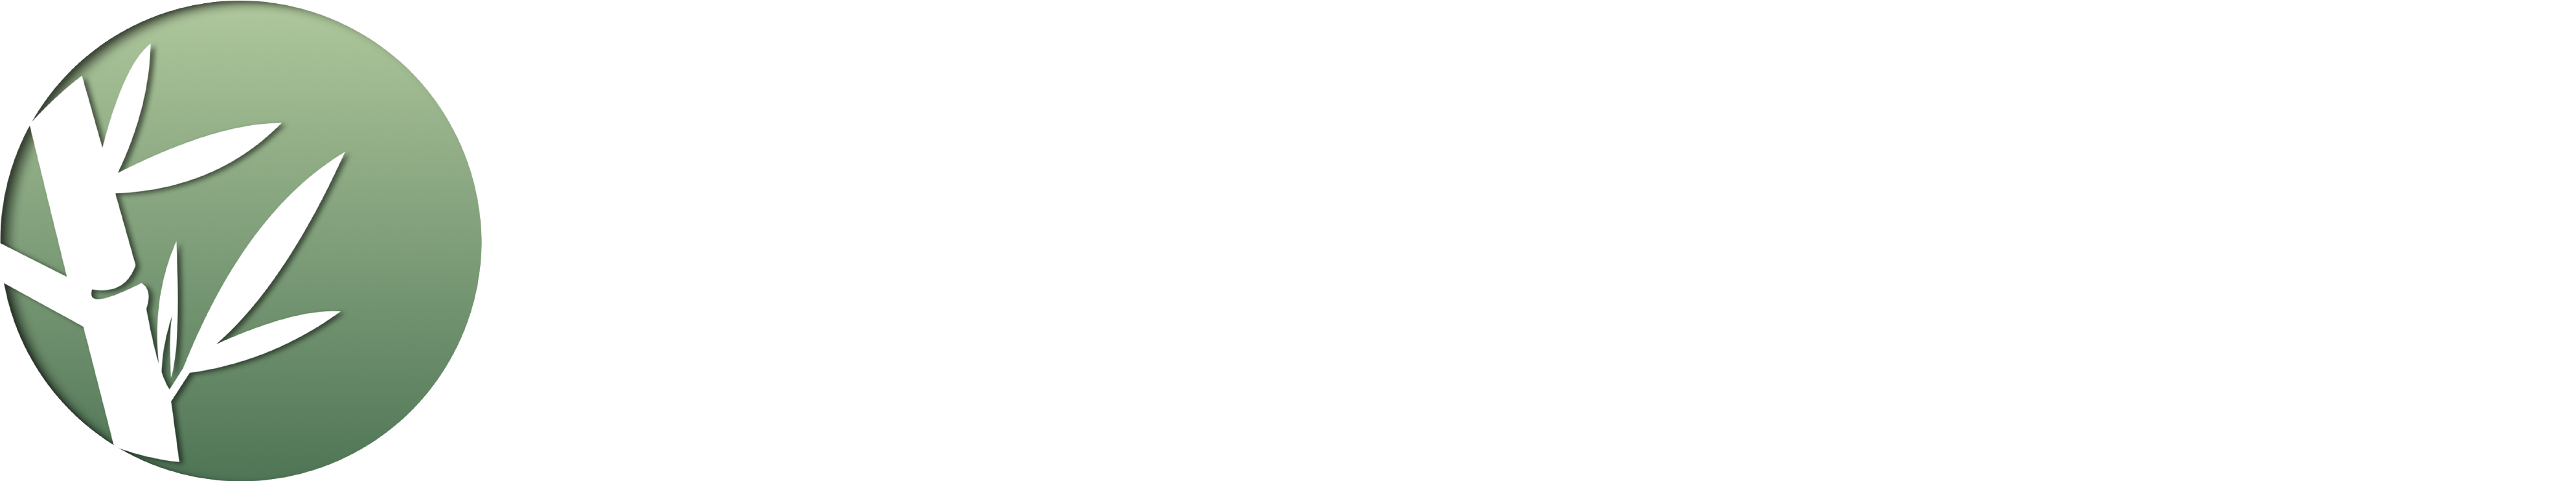 ffl-logo-new-rev